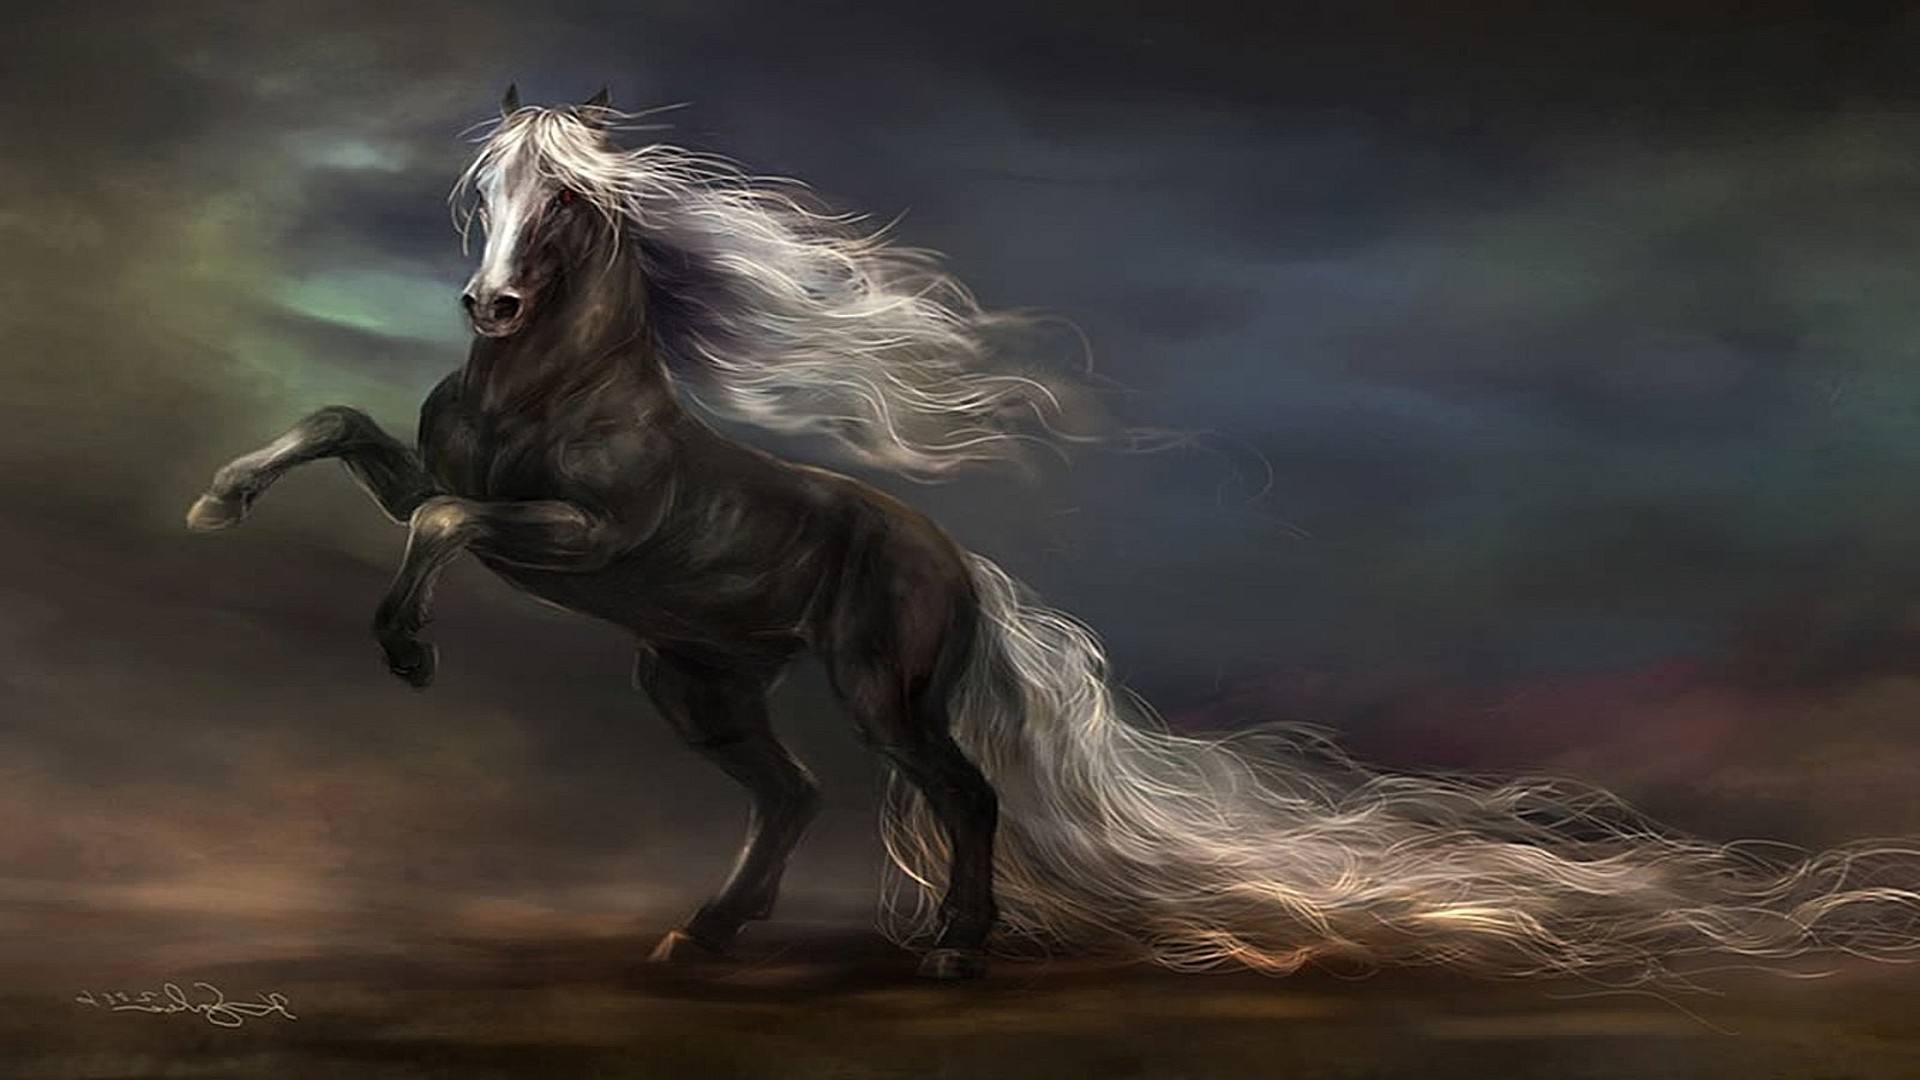 horses cavalry mare fantasy illustration art motion storm mammal water sunset moon fairytale horse magic sky